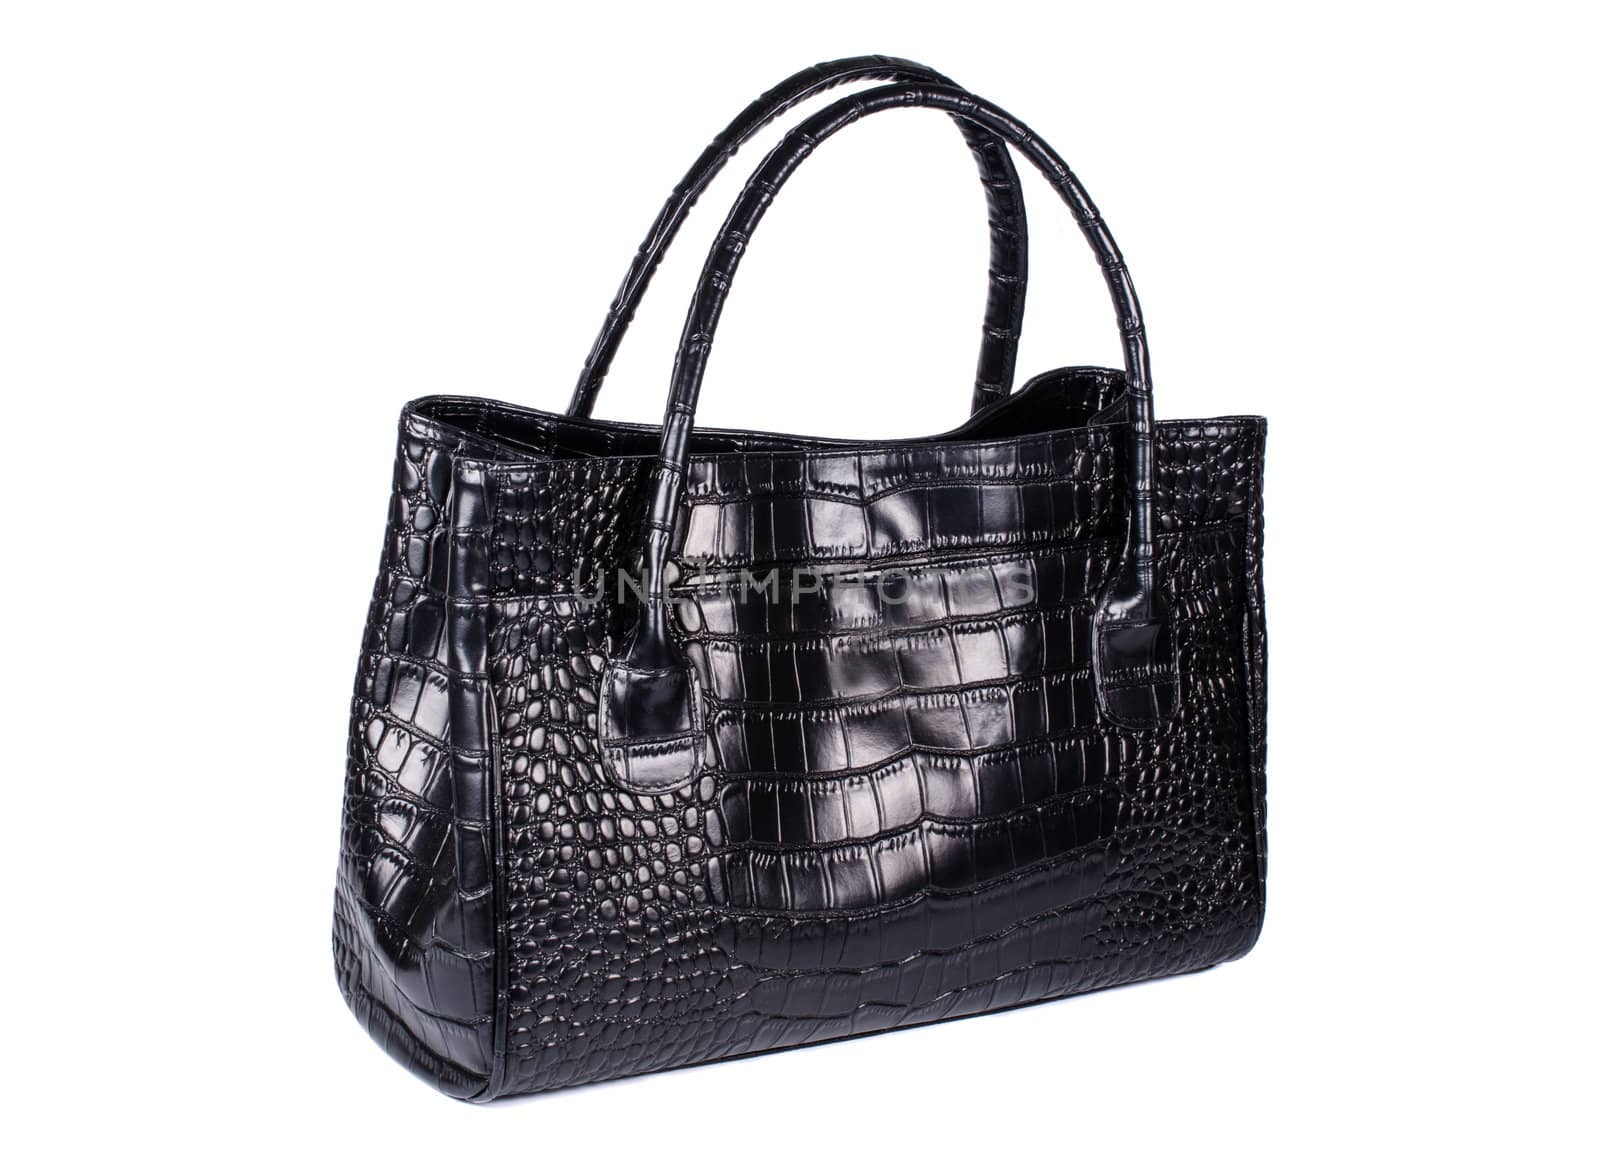 Elegant black bag with handles